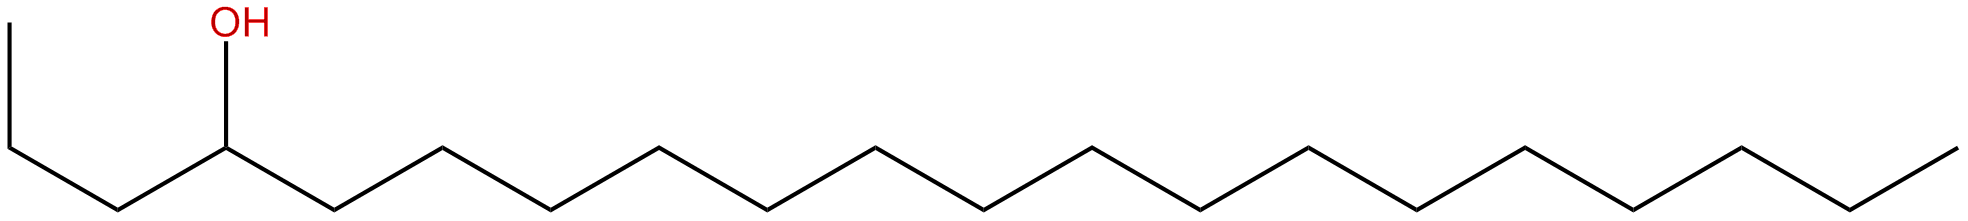 Image of 4-eicosanol